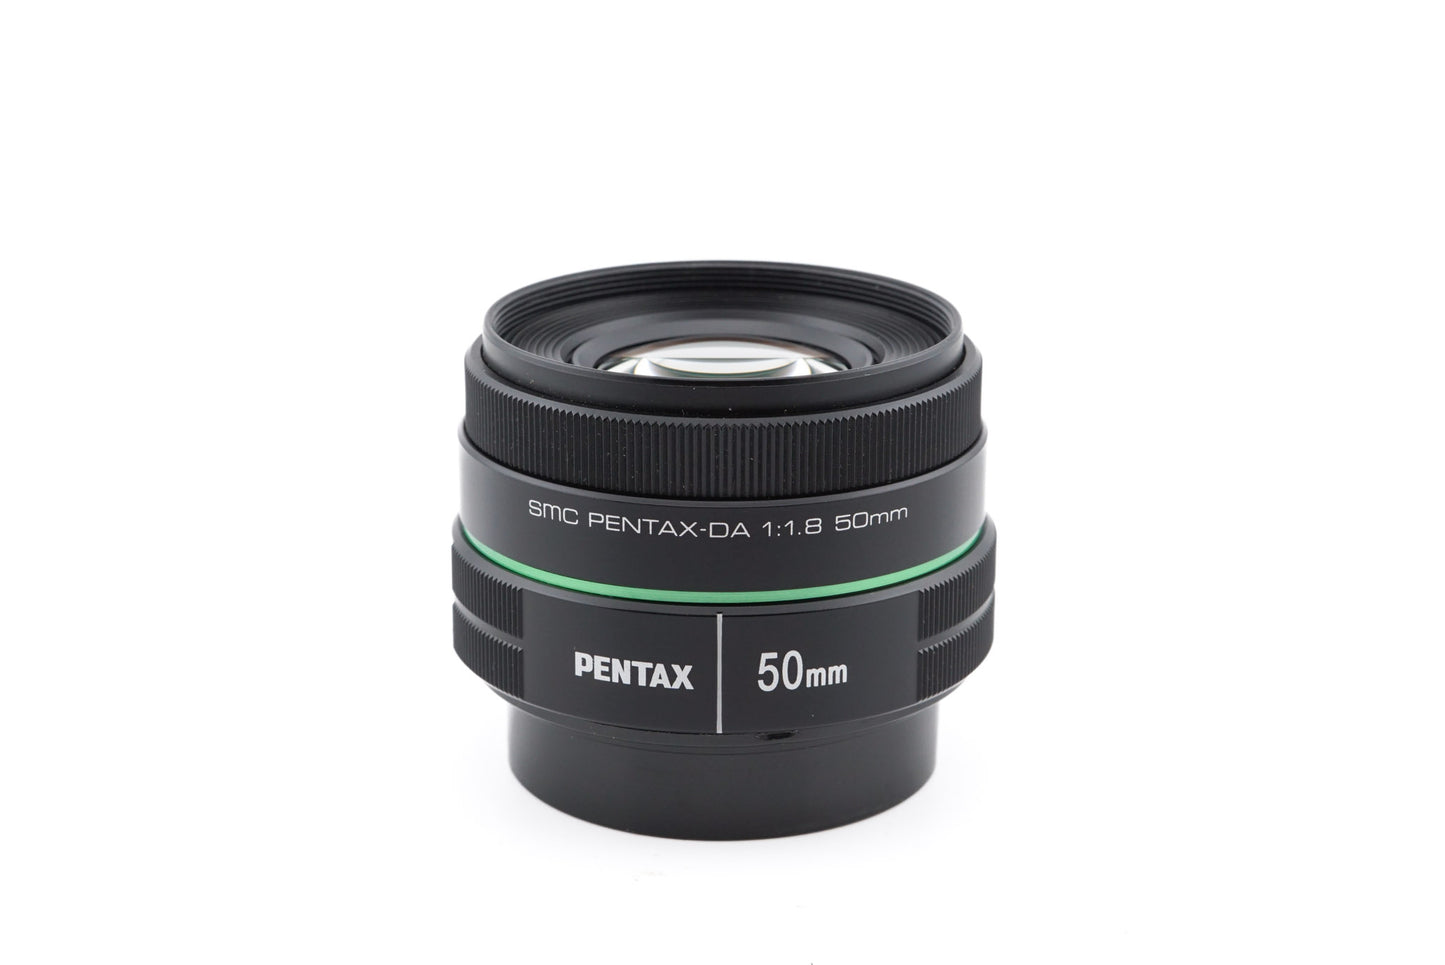 Pentax 50mm f1.8 SMC Pentax-DA - Lens